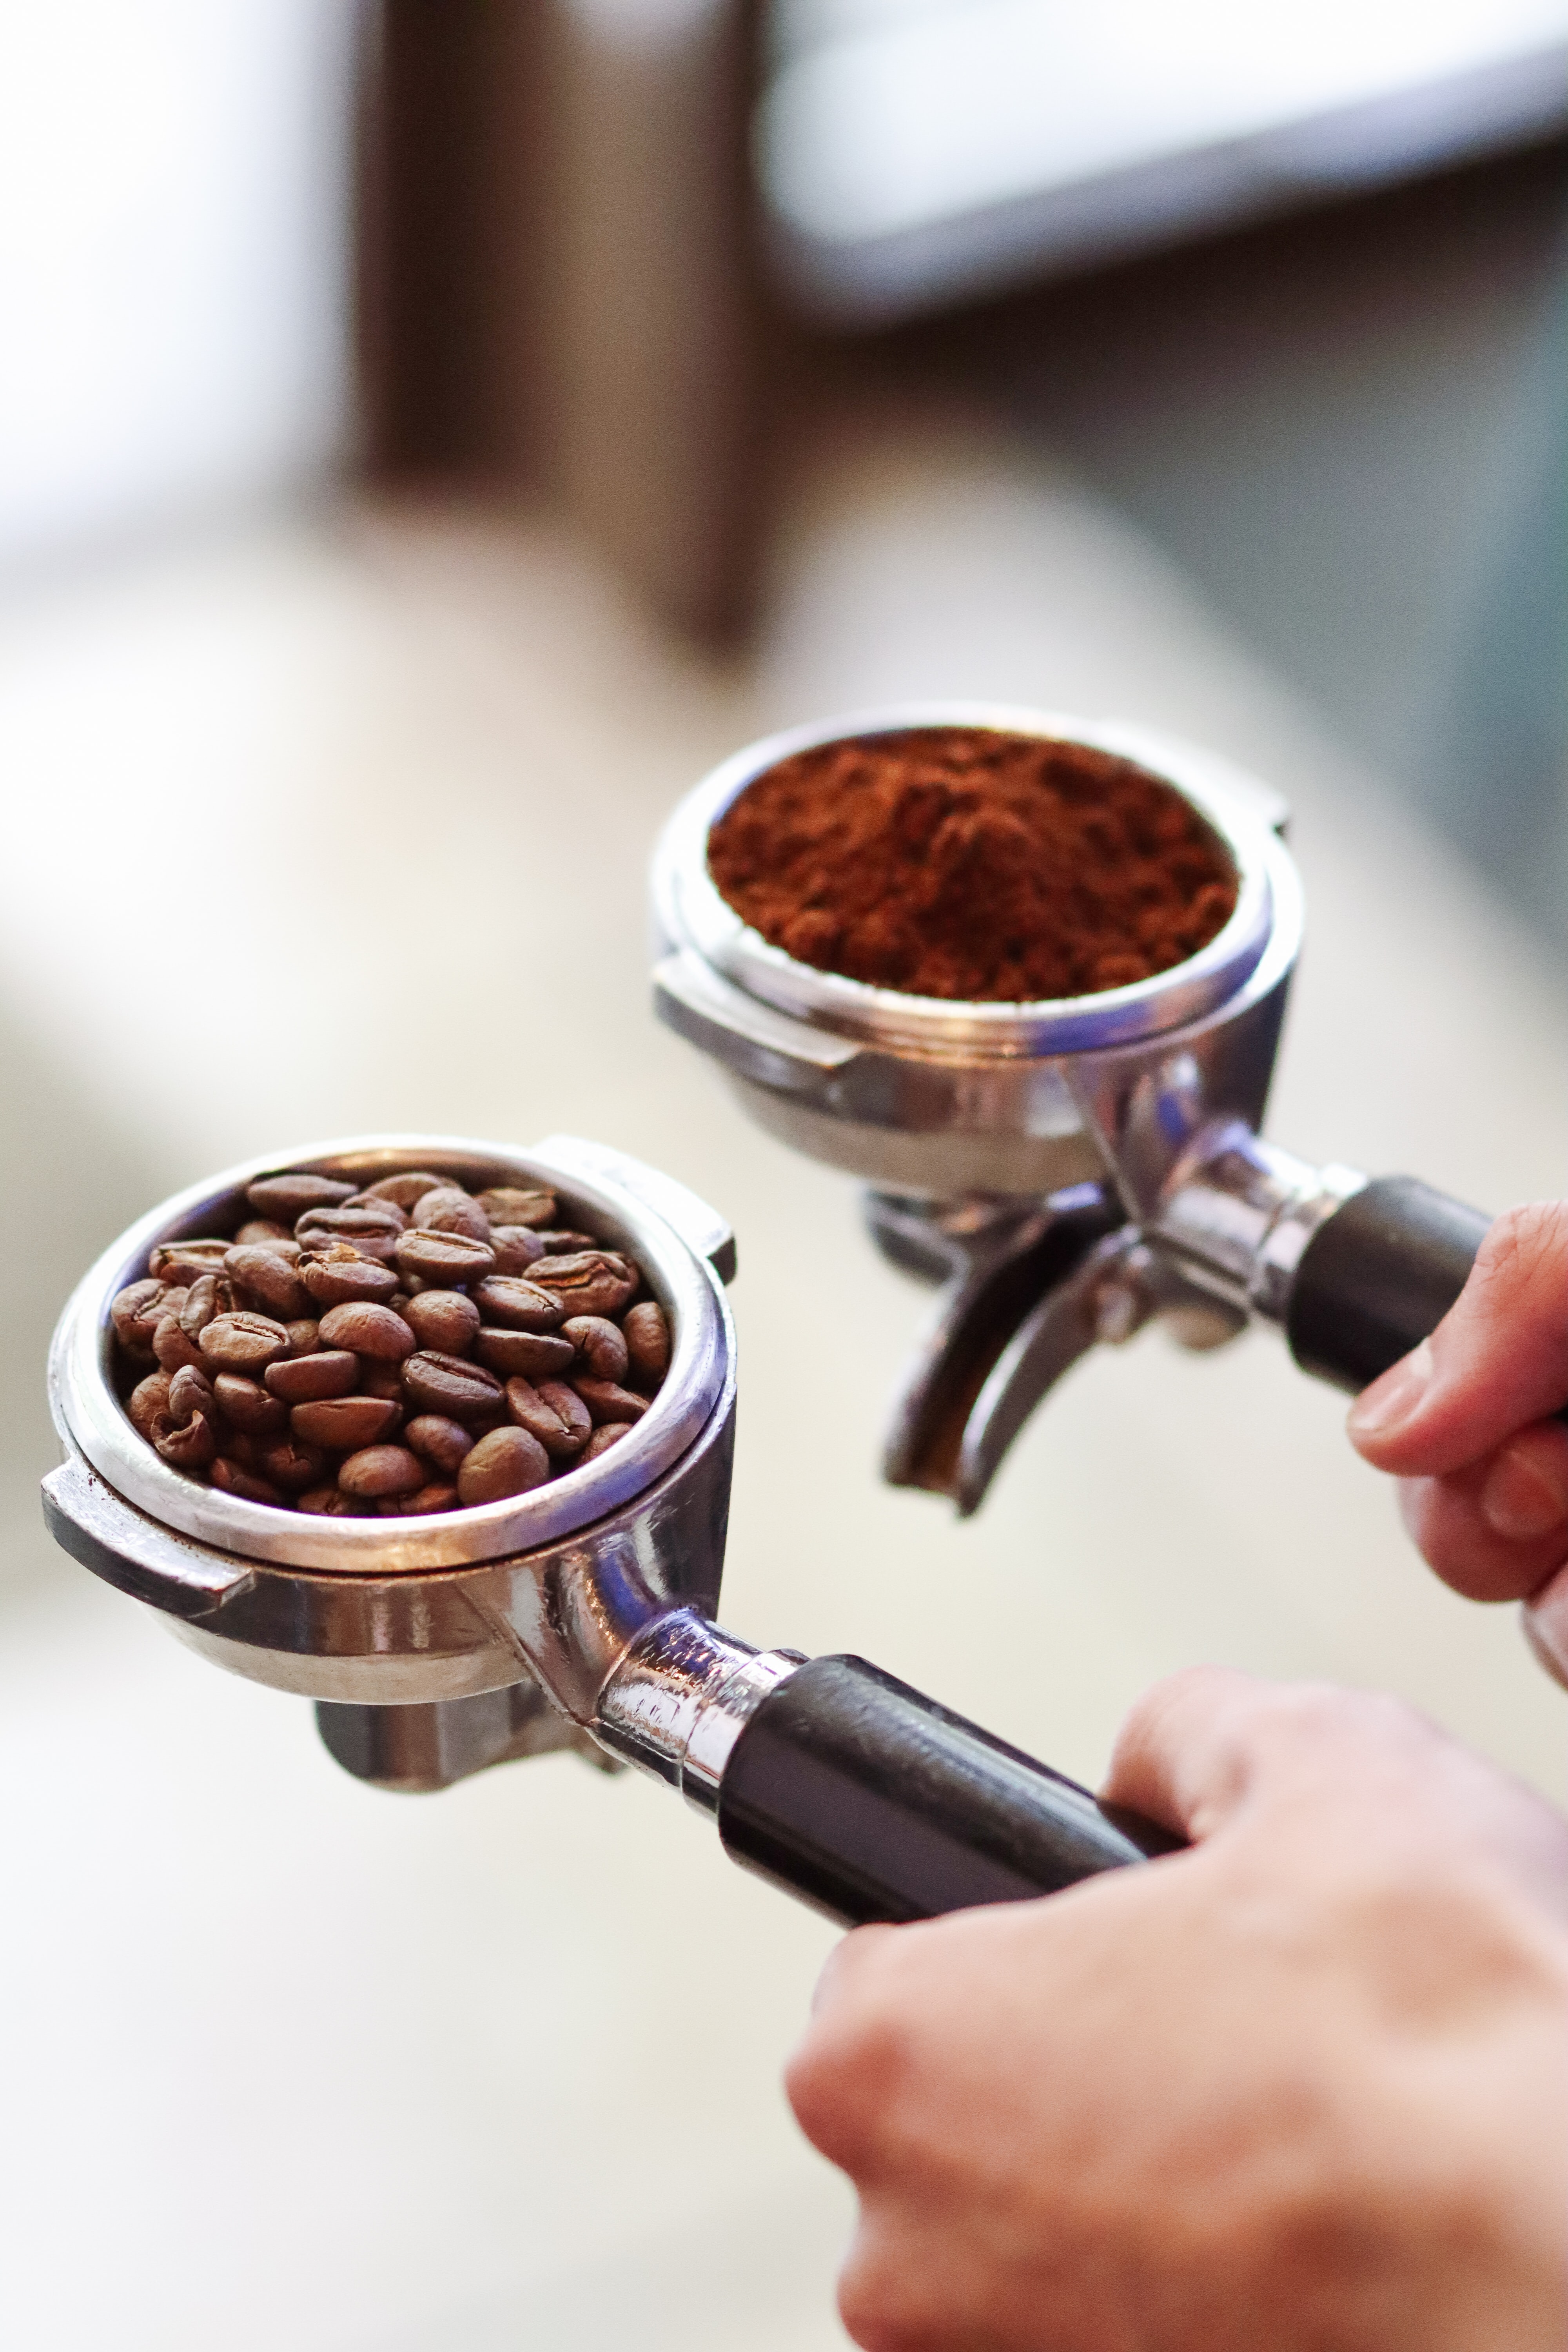 HD wallpaper coffee beans, food, hands, grains, grain, barista, ground coffee